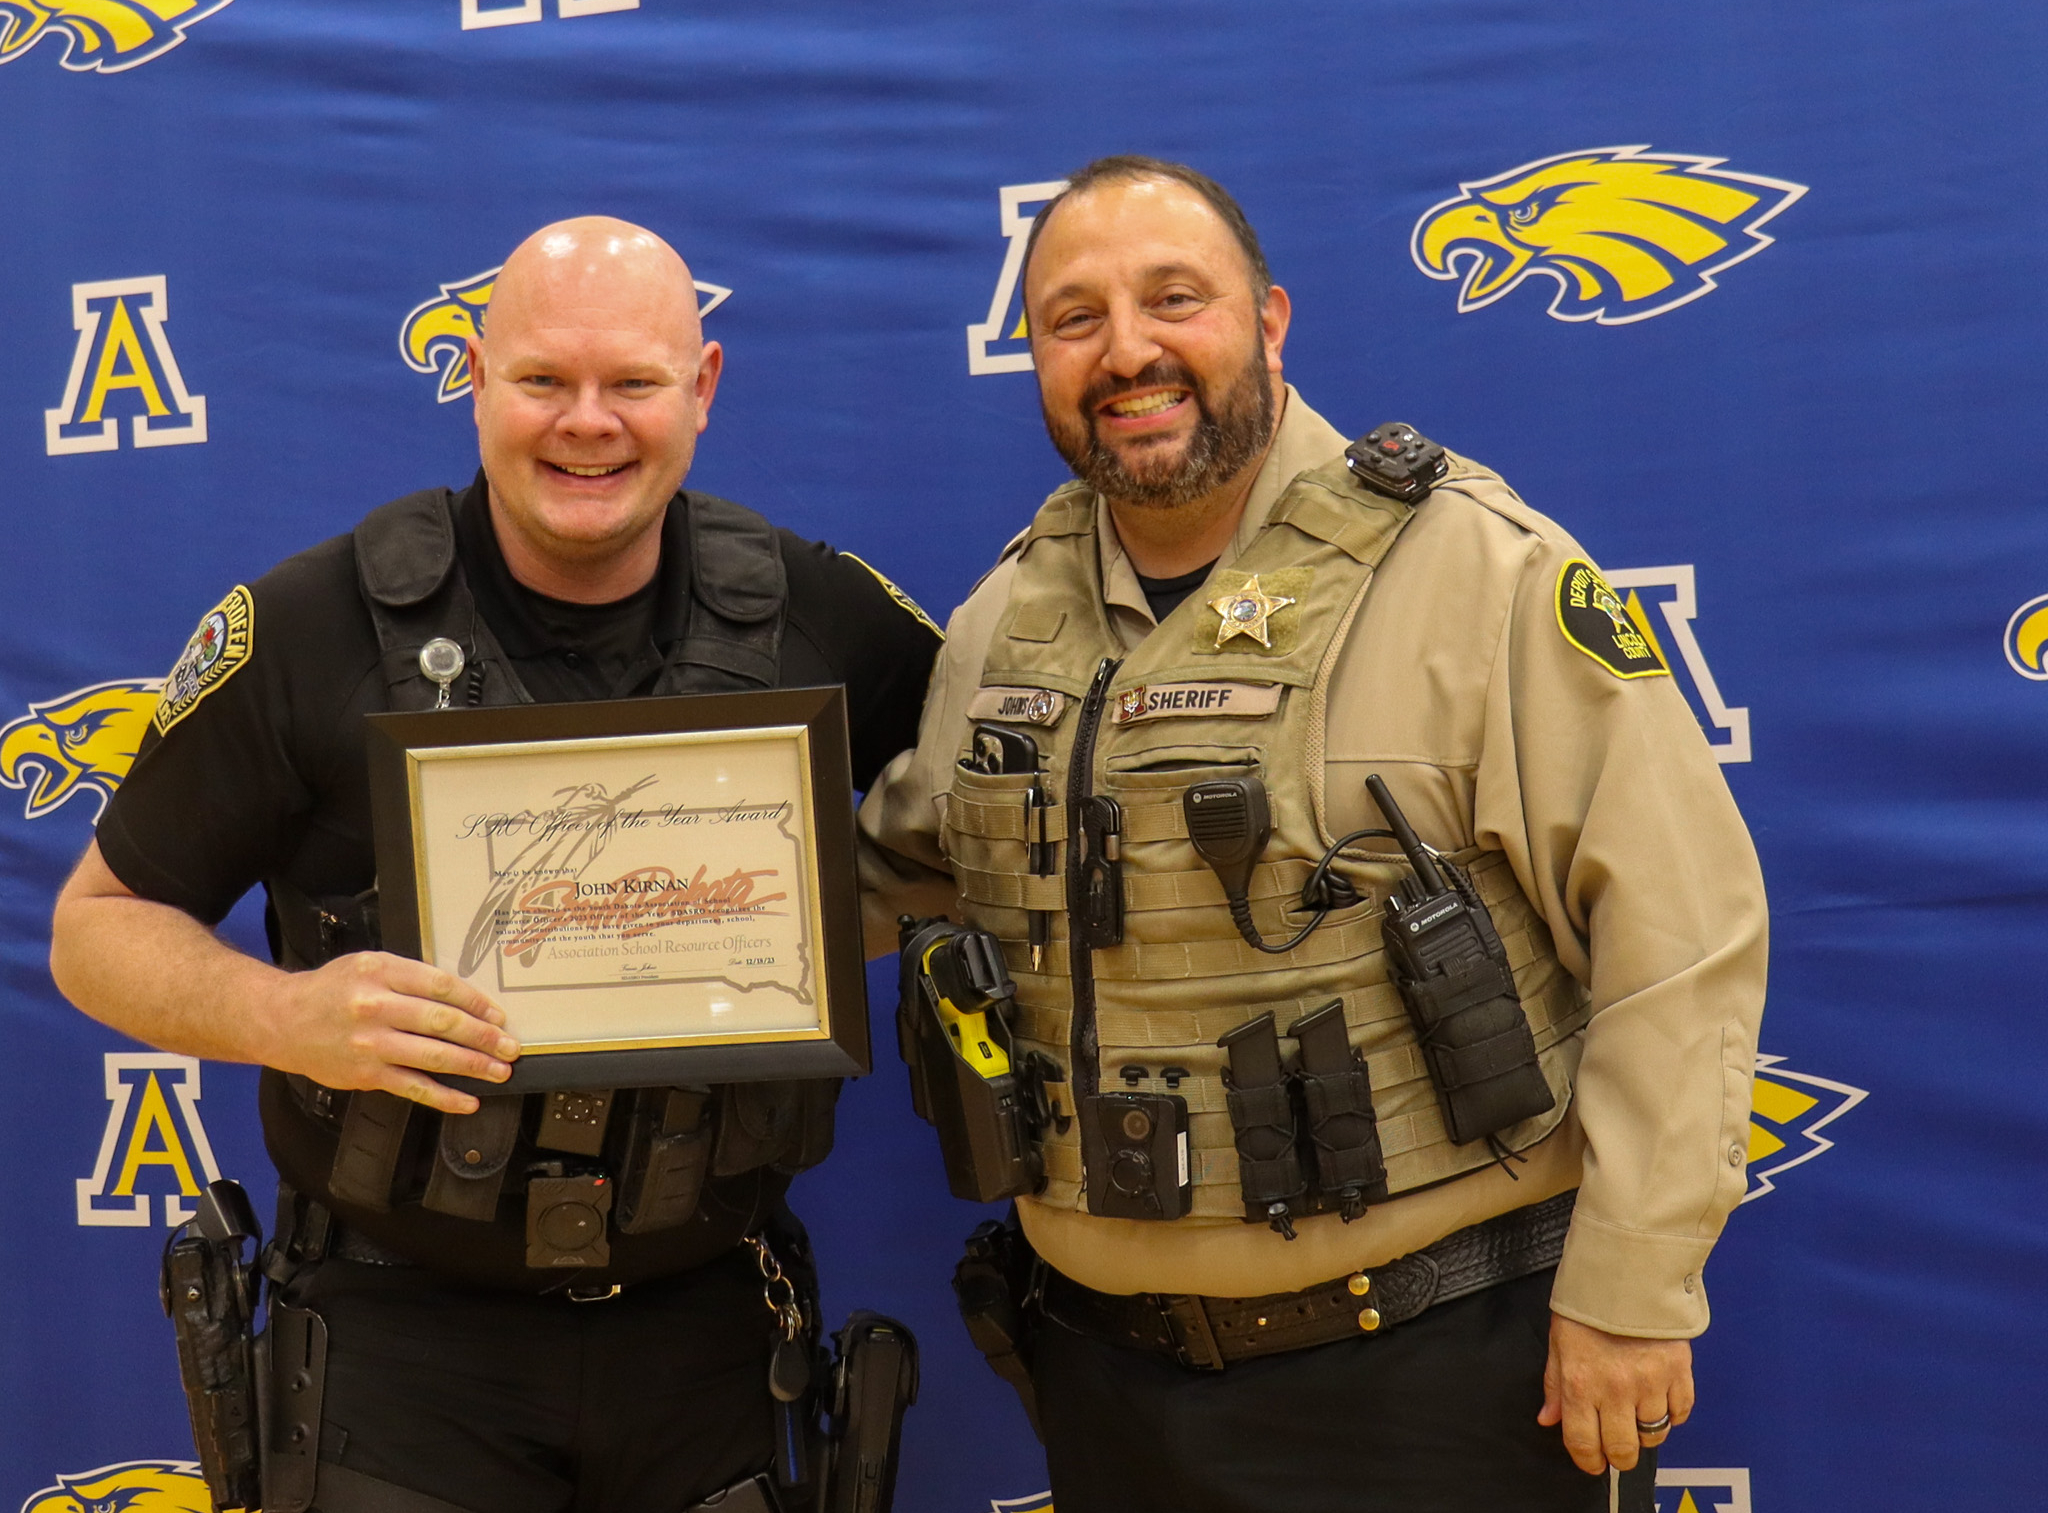 Officer Kirnan with his award